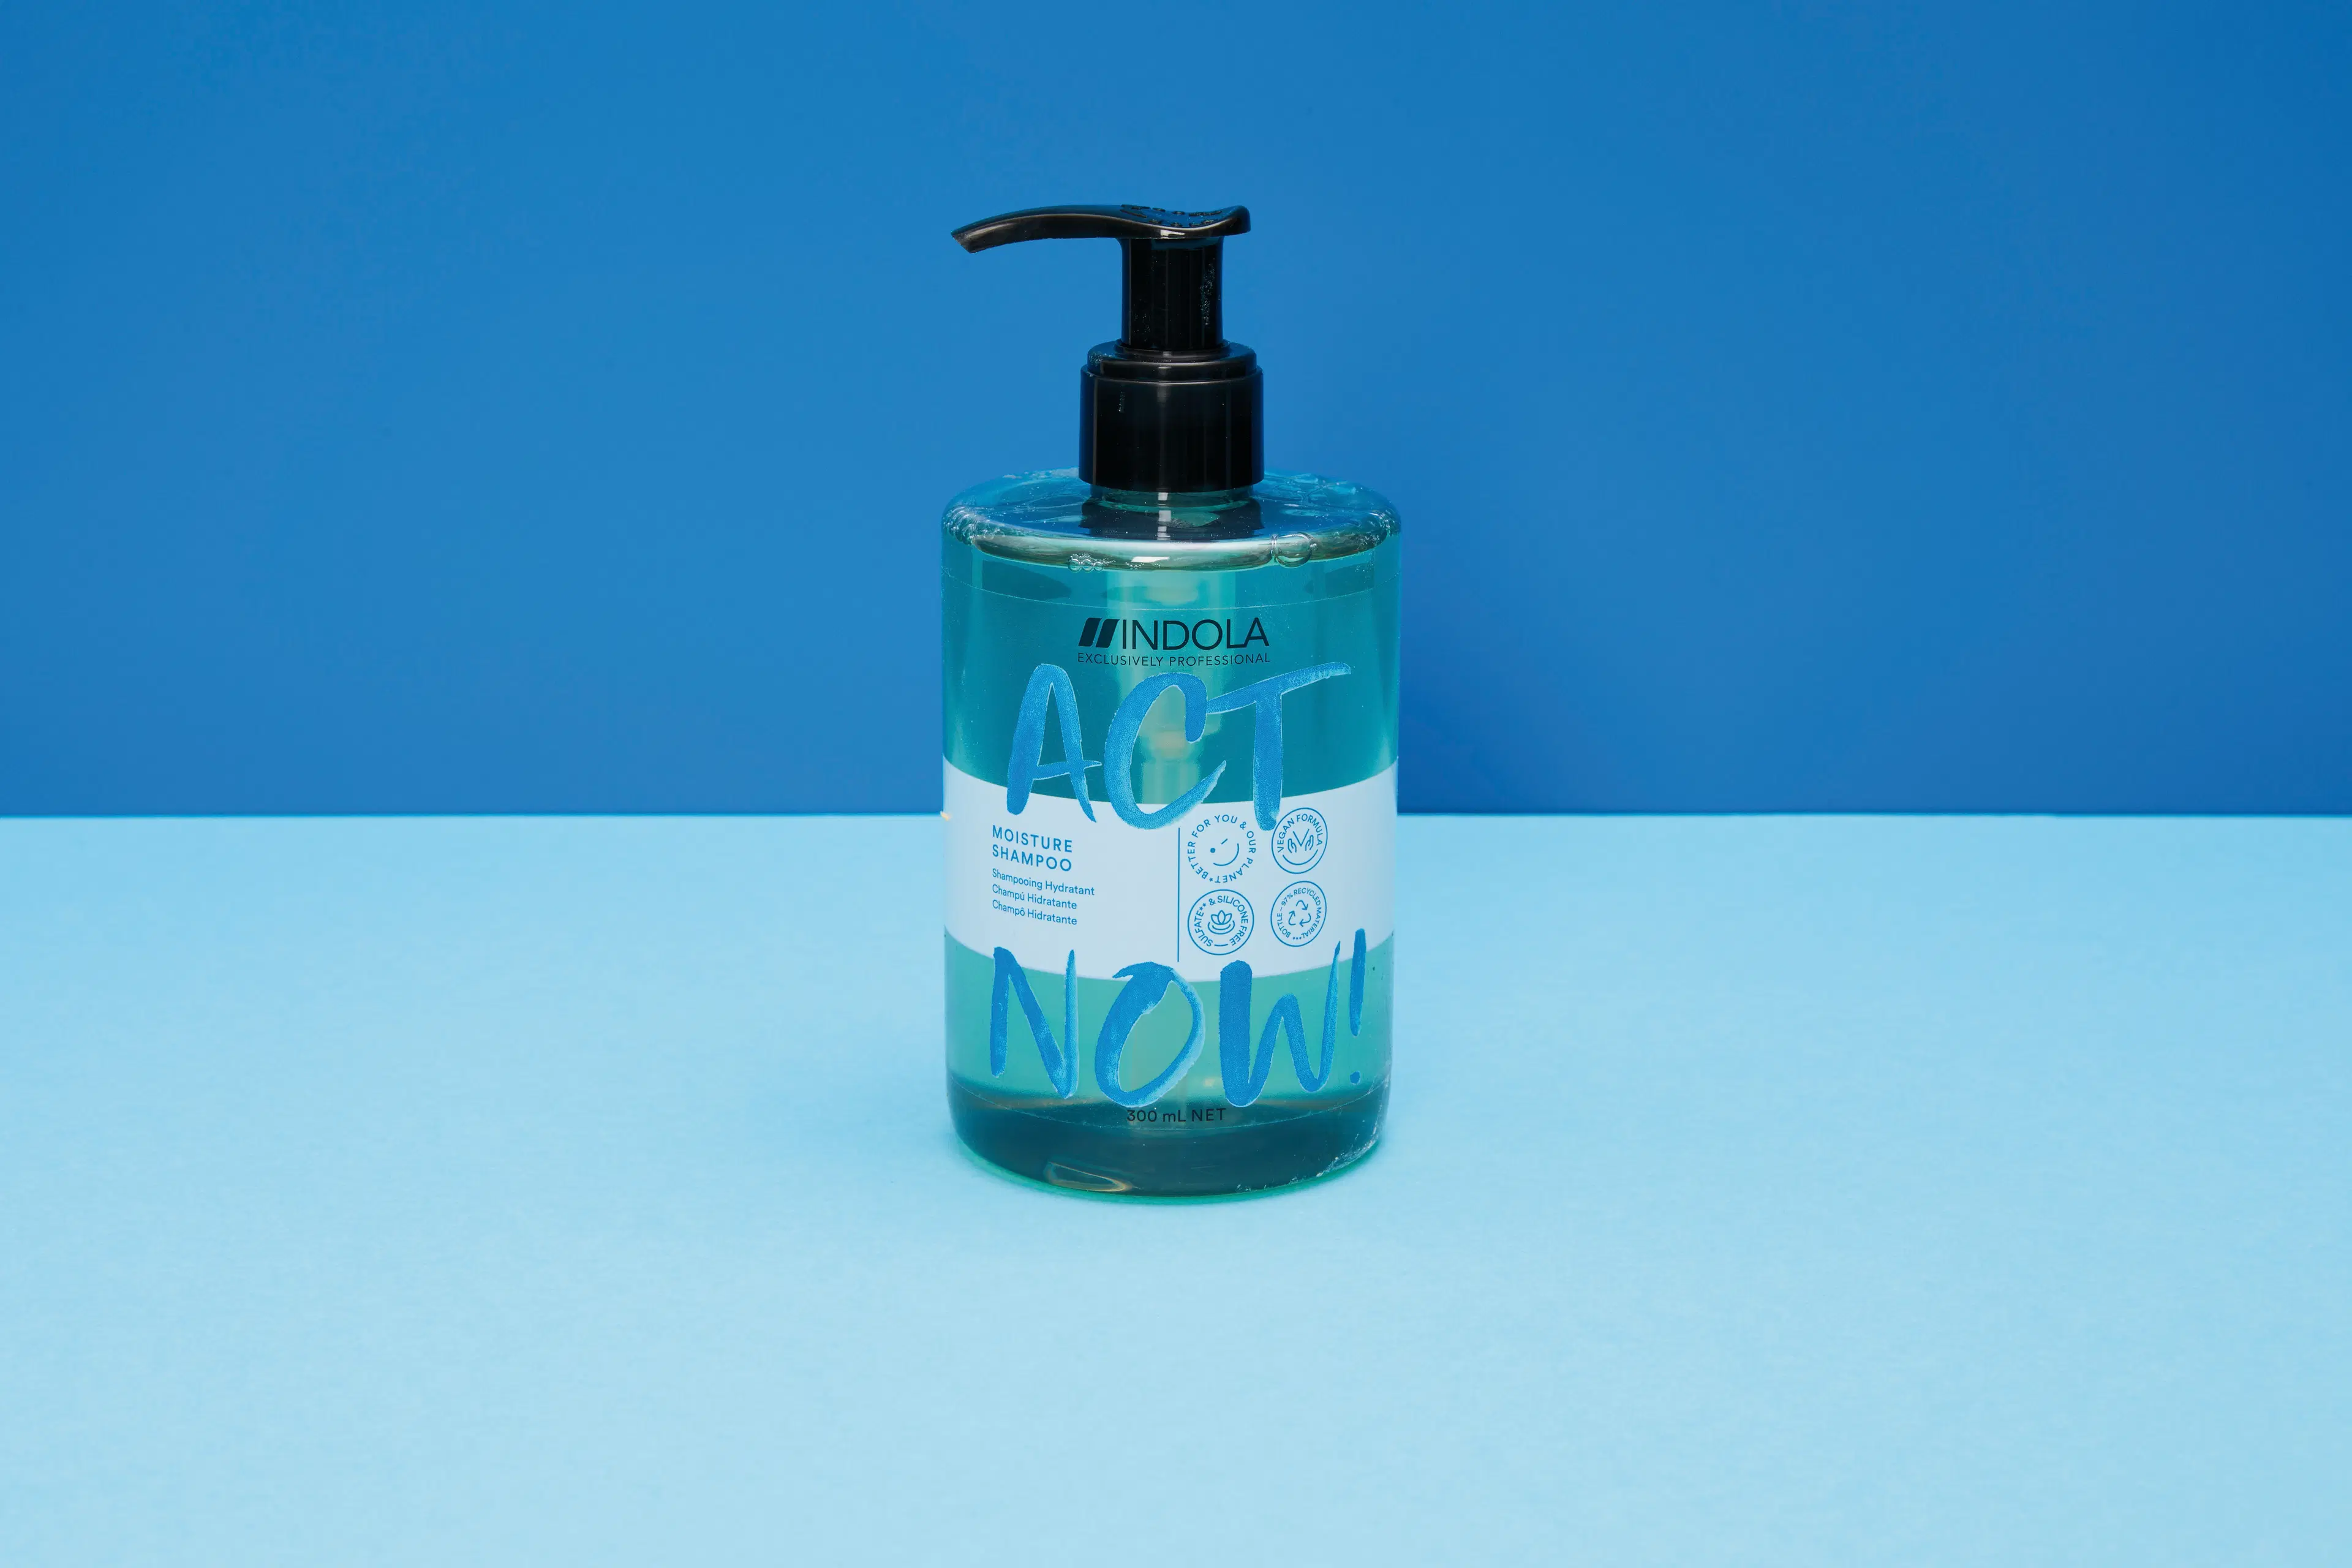 ACT NOW! Moisture Shampoo 300 ml